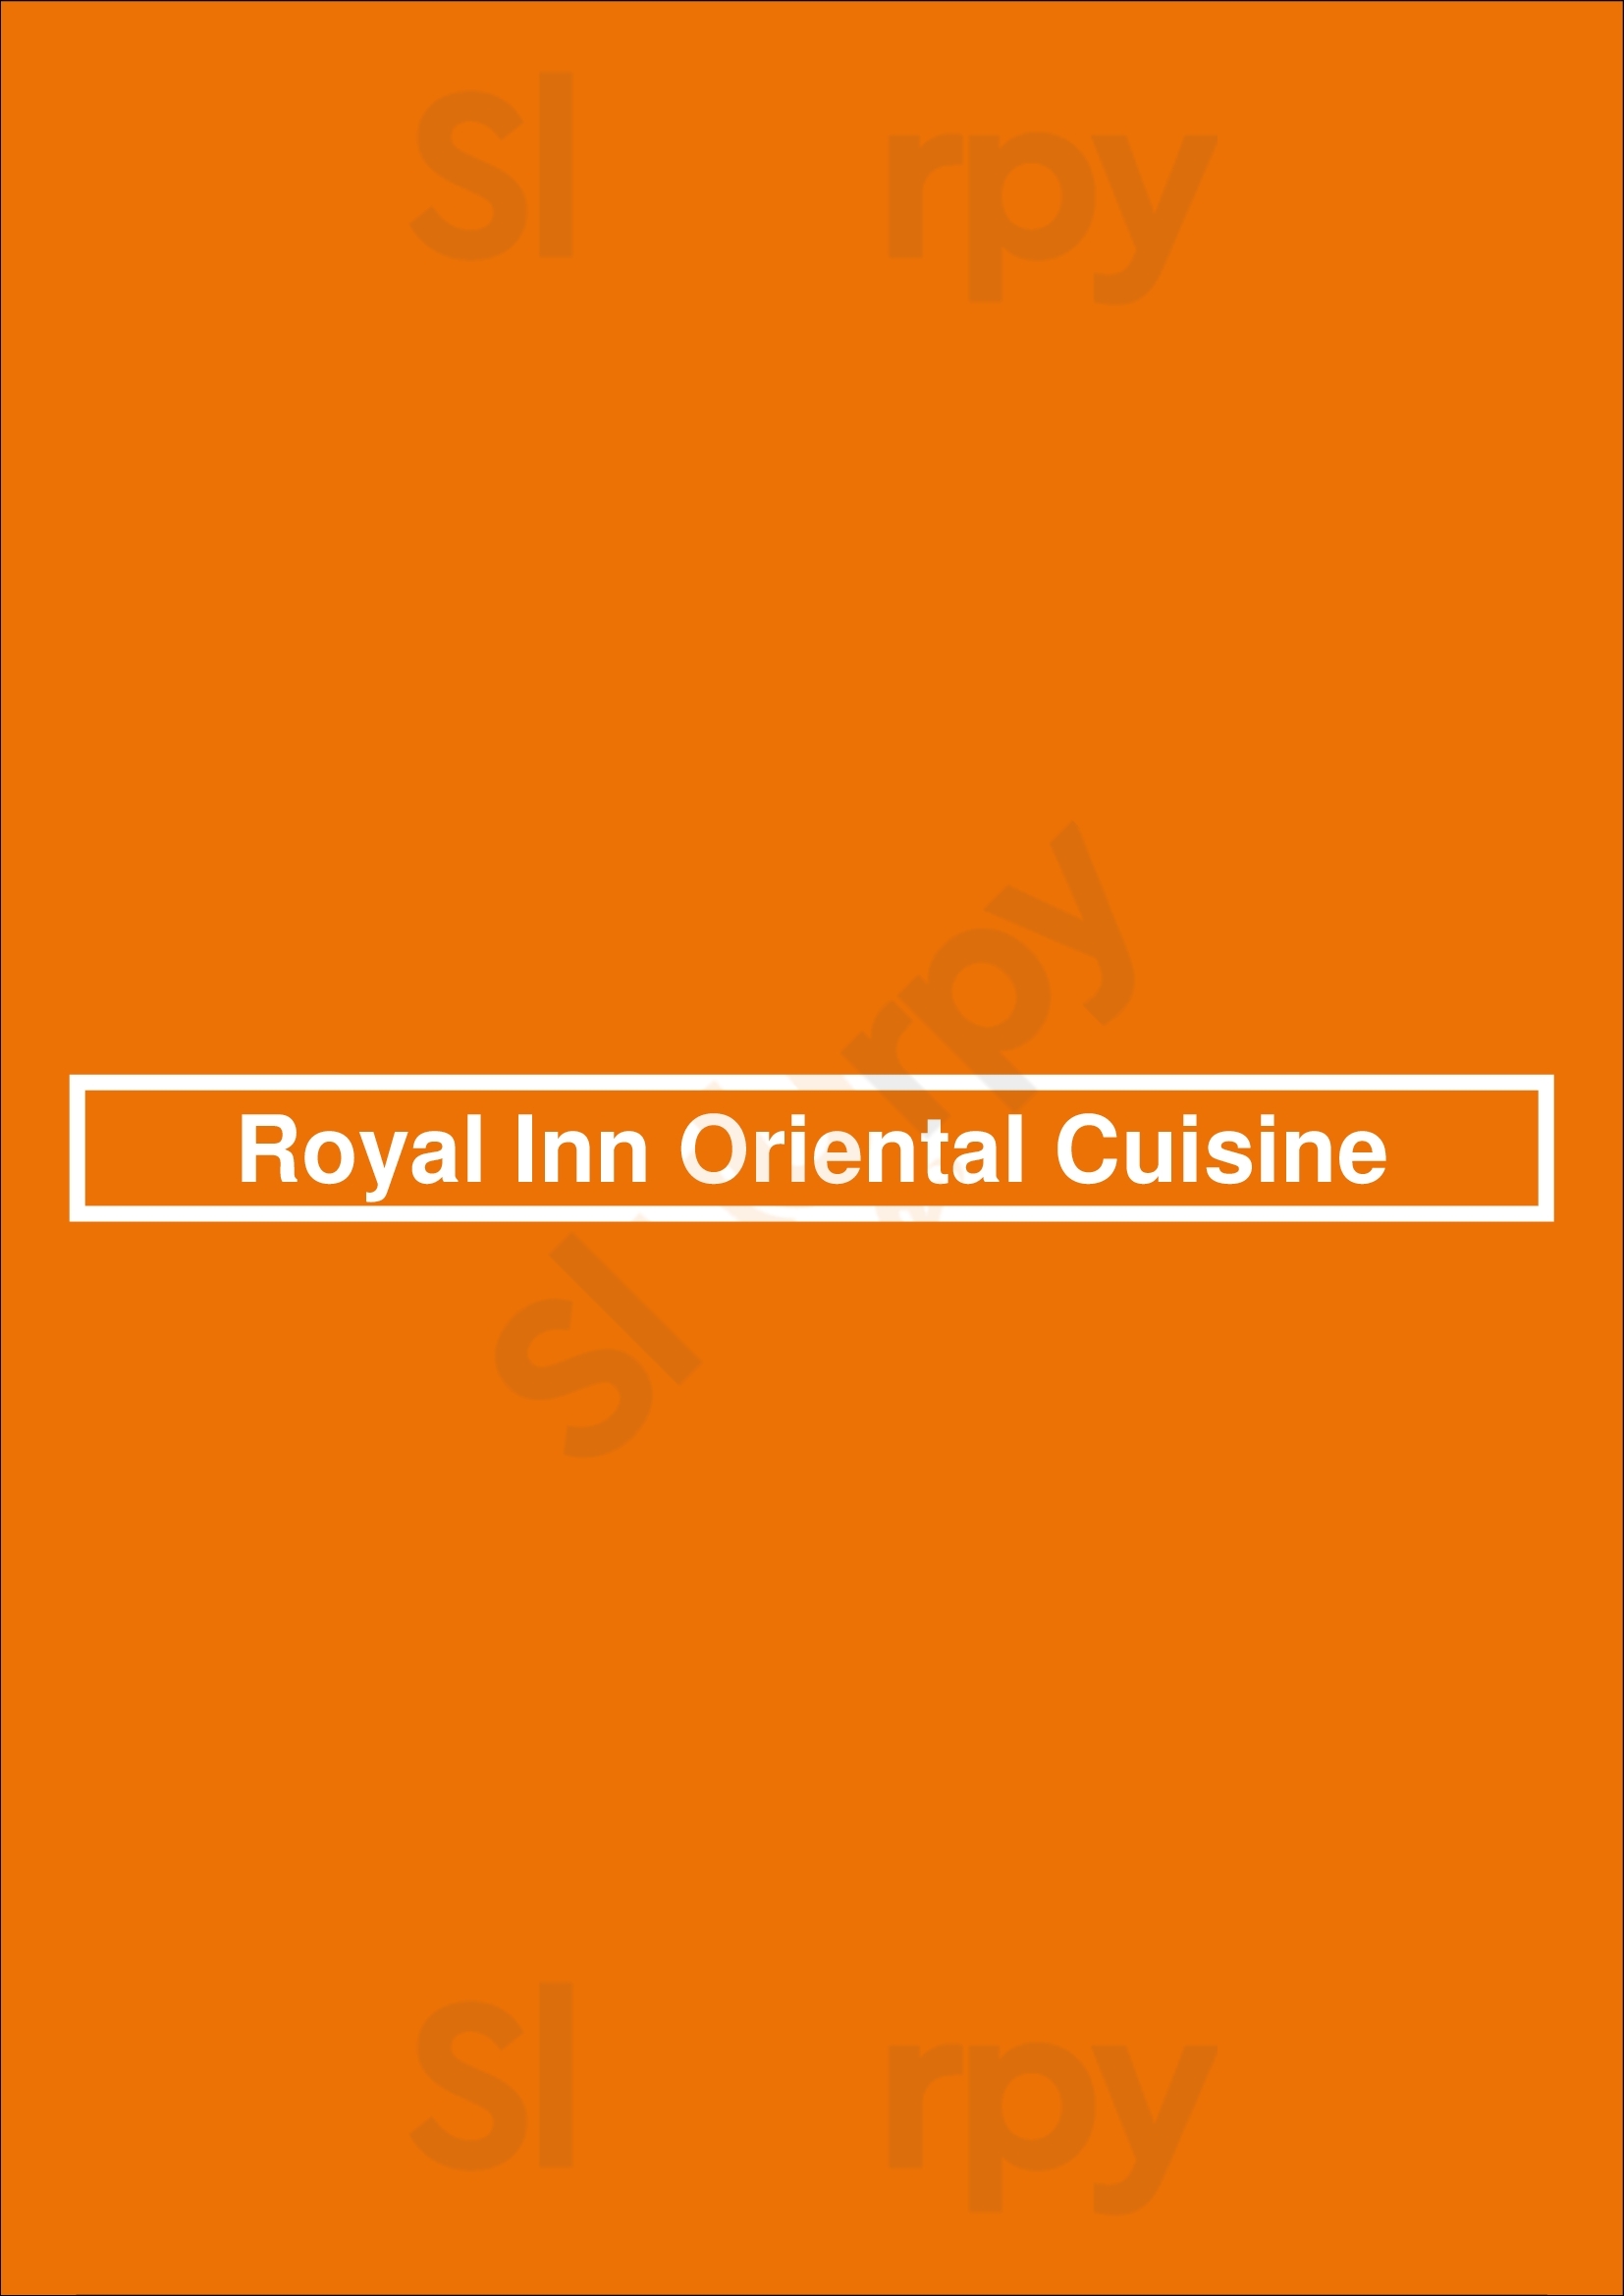 Royal Inn Oriental Cuisine San Antonio Menu - 1